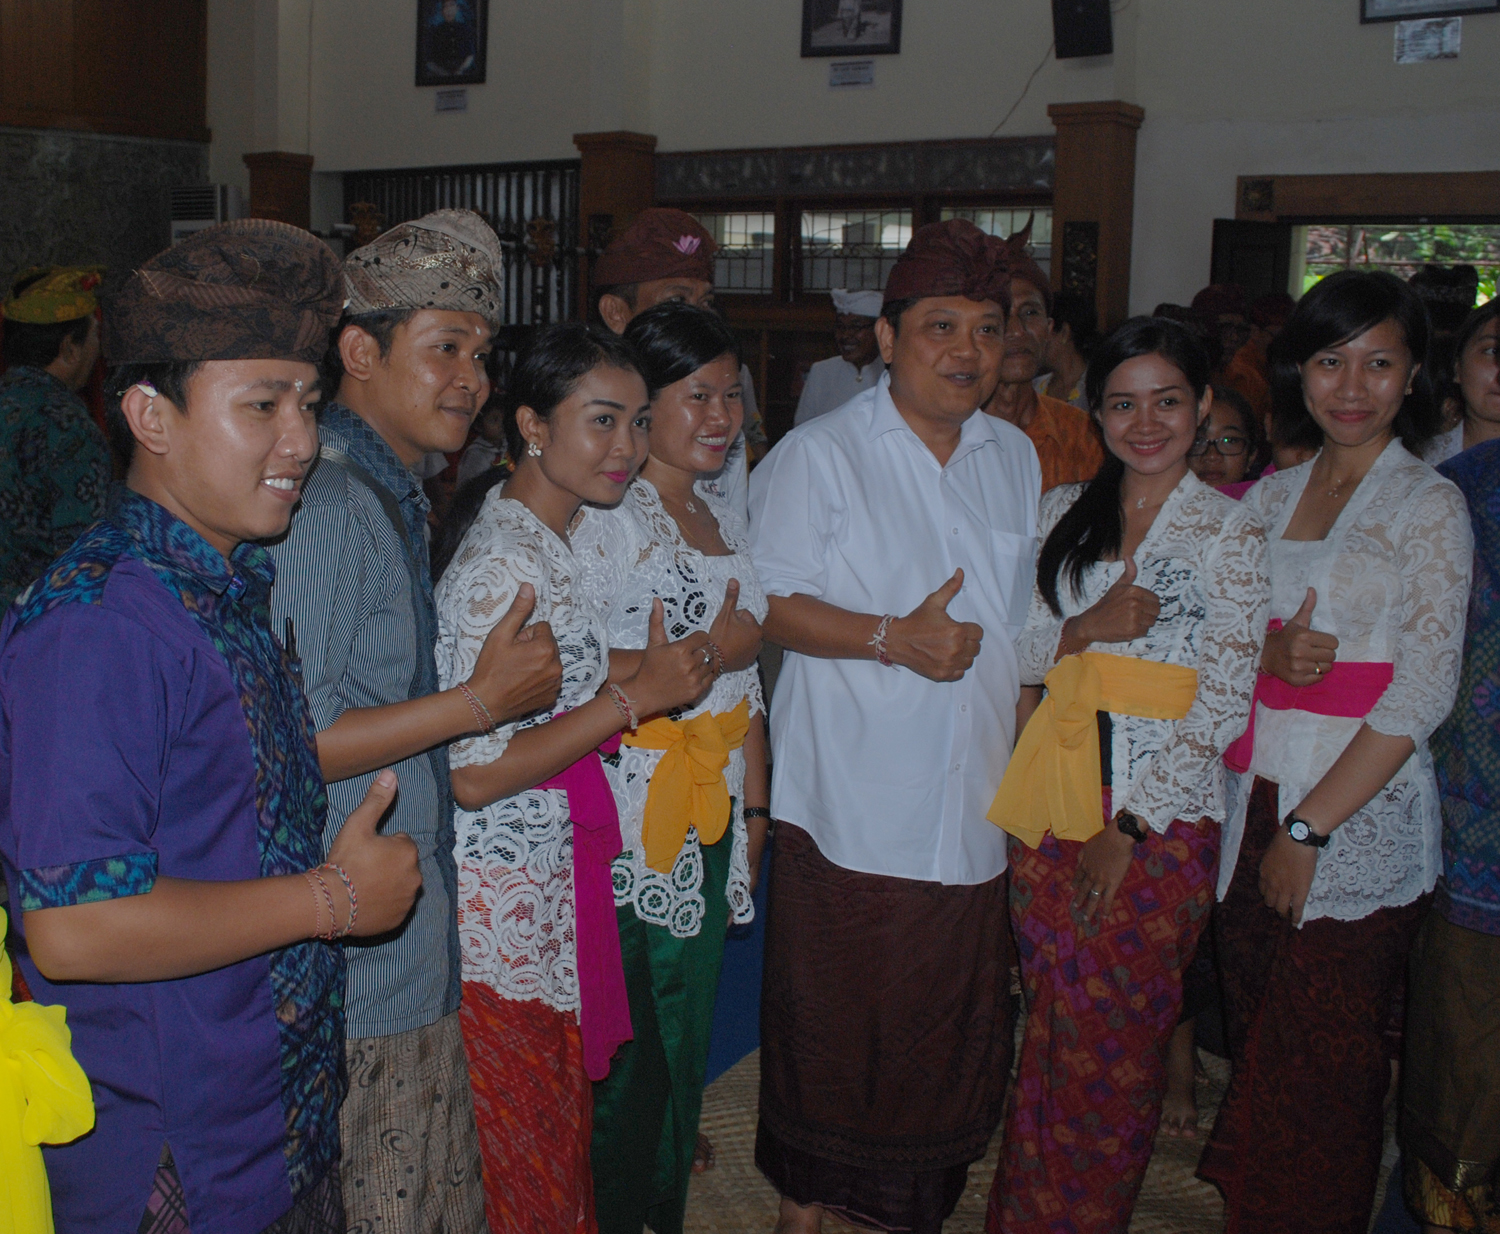 Walikota Denpasar, IB Rai Dharmawijaya Mantra saat melepas para peserta Utsawa Dharmagita Tingkat Provinsi Bali pada Senin (26/9).